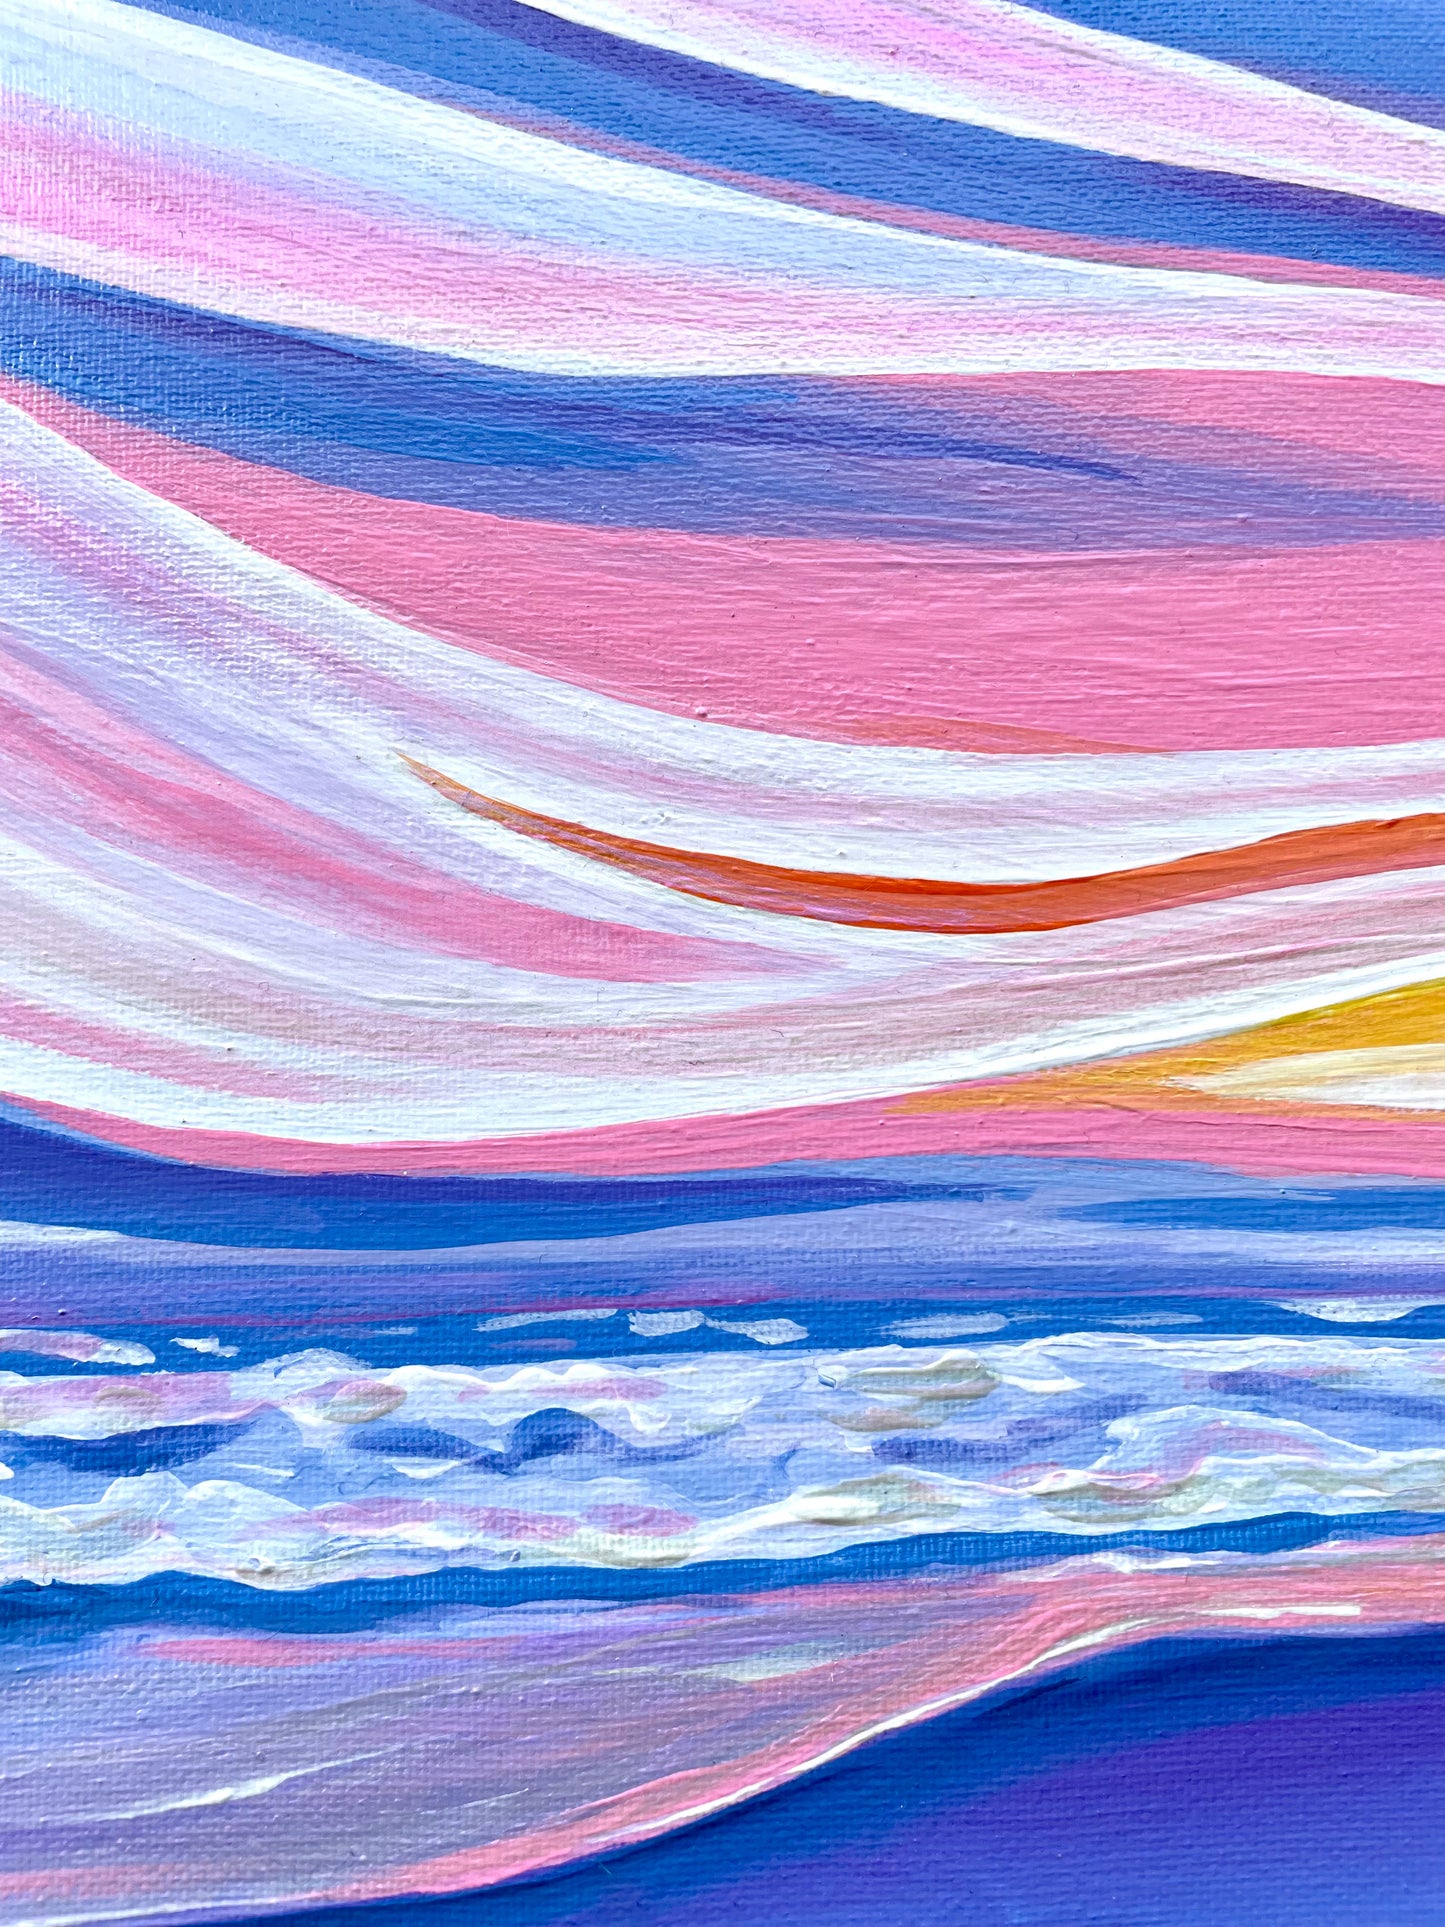 sunset on shelly island - original painting